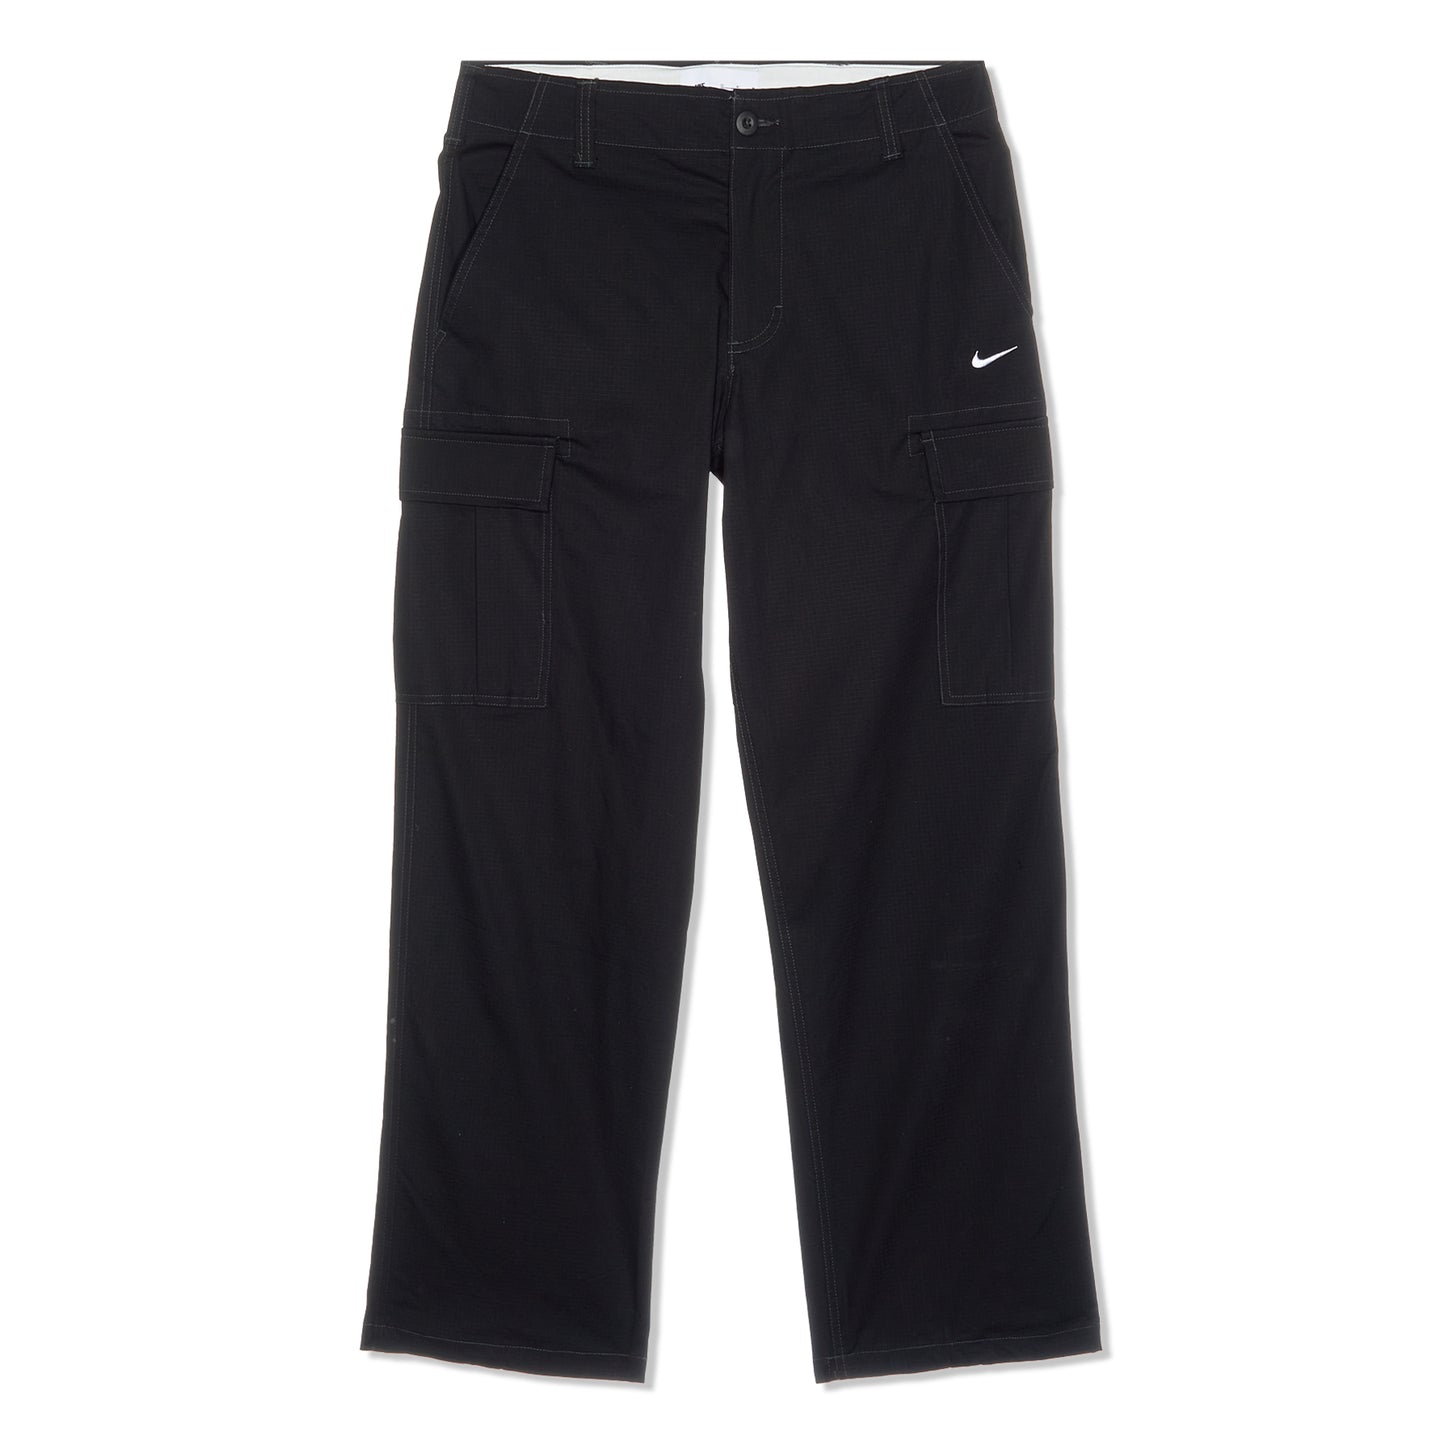 Nike SB Kearny Chino Pant (Black/Anthracite)